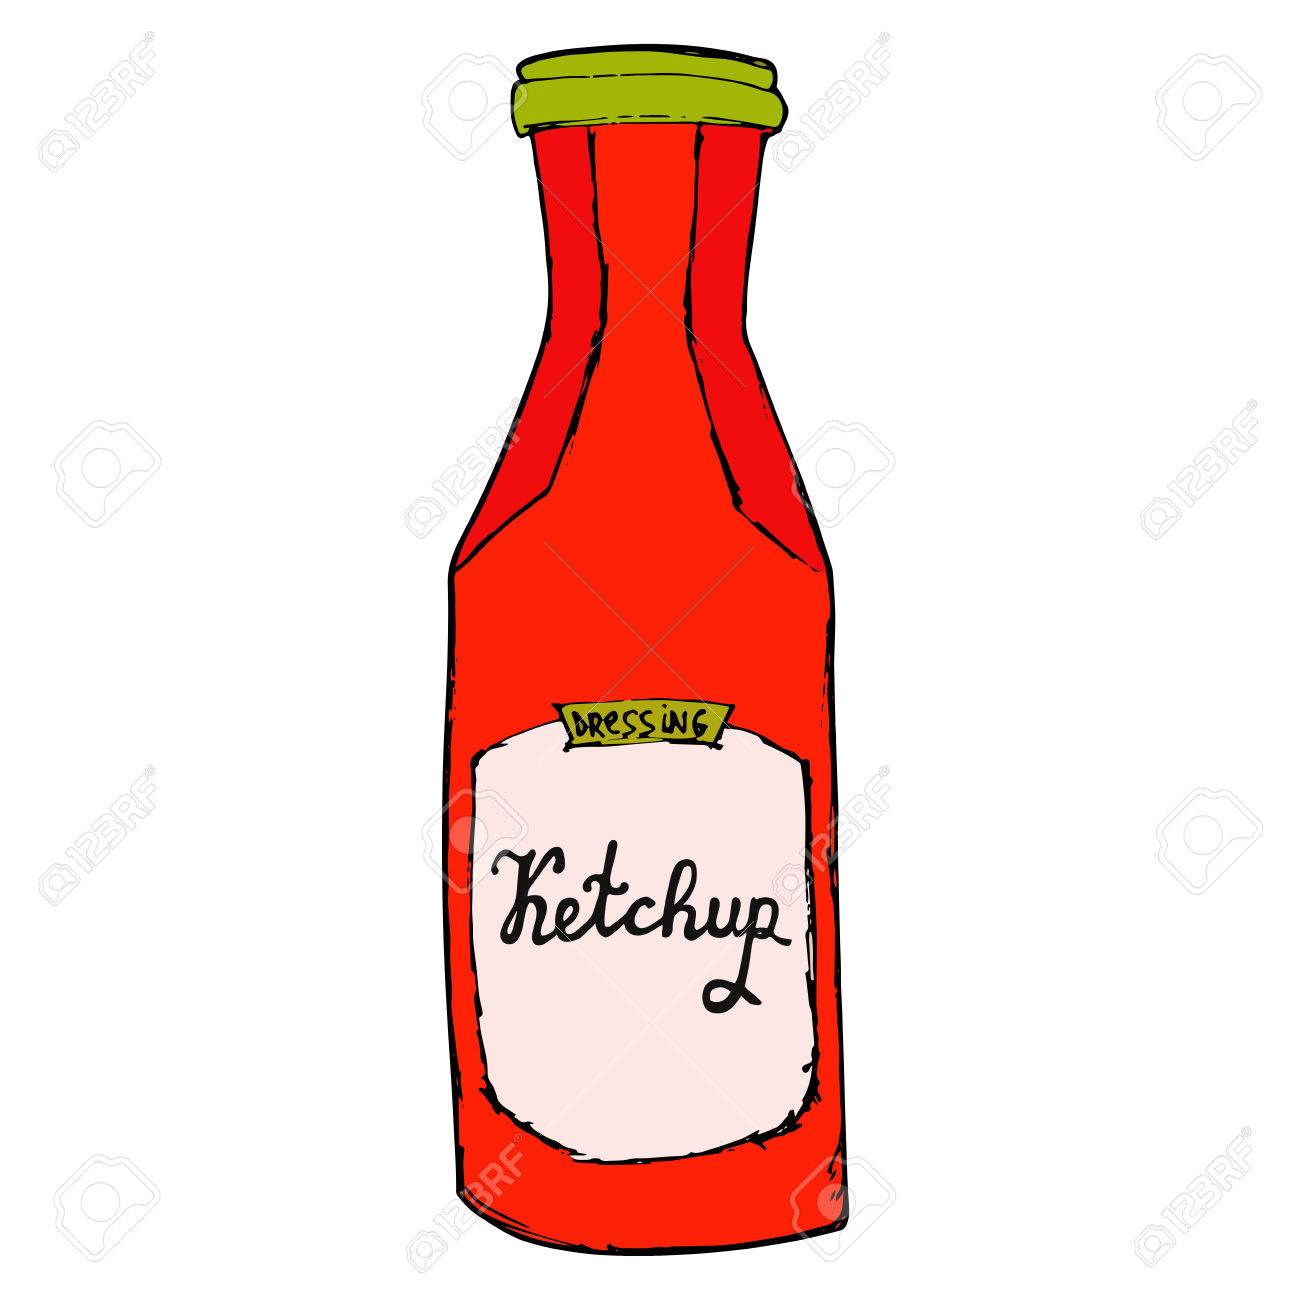 Ketchup bottle. Hand drawn tomato sauce jar sketchy illustration..